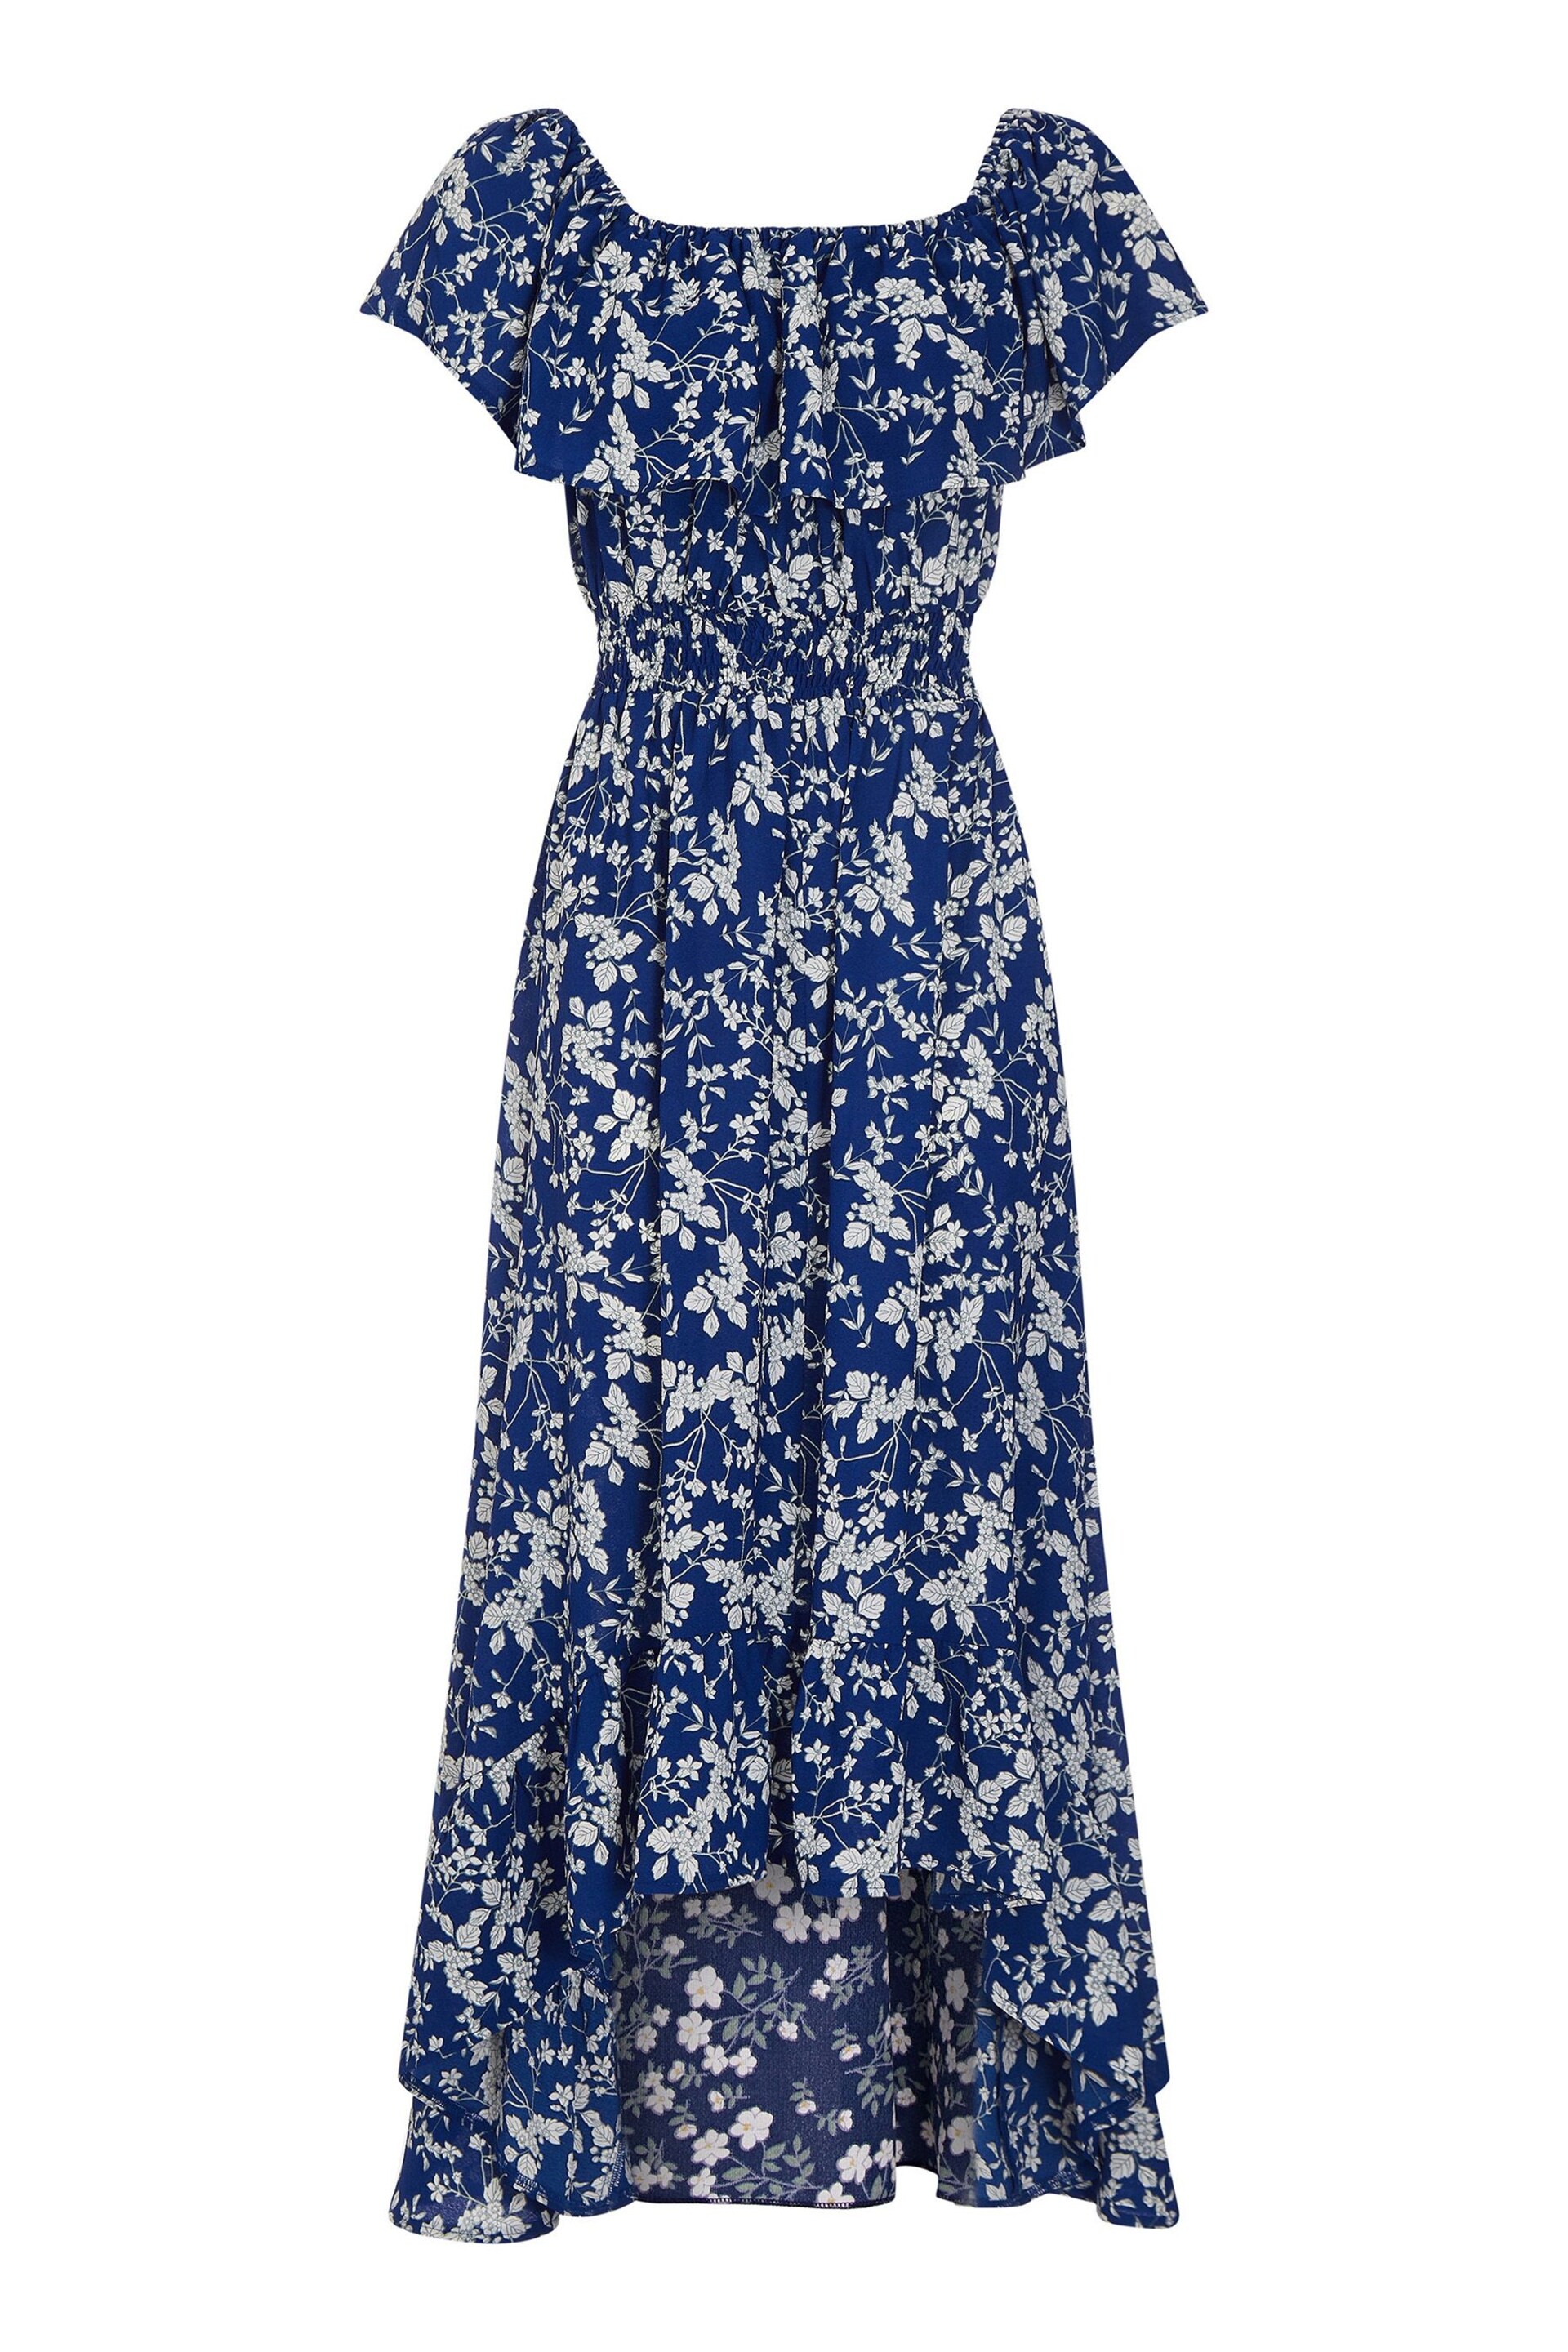 Mela Blue Ditsy Print Bardot Dipped Hem Dress - Image 4 of 4